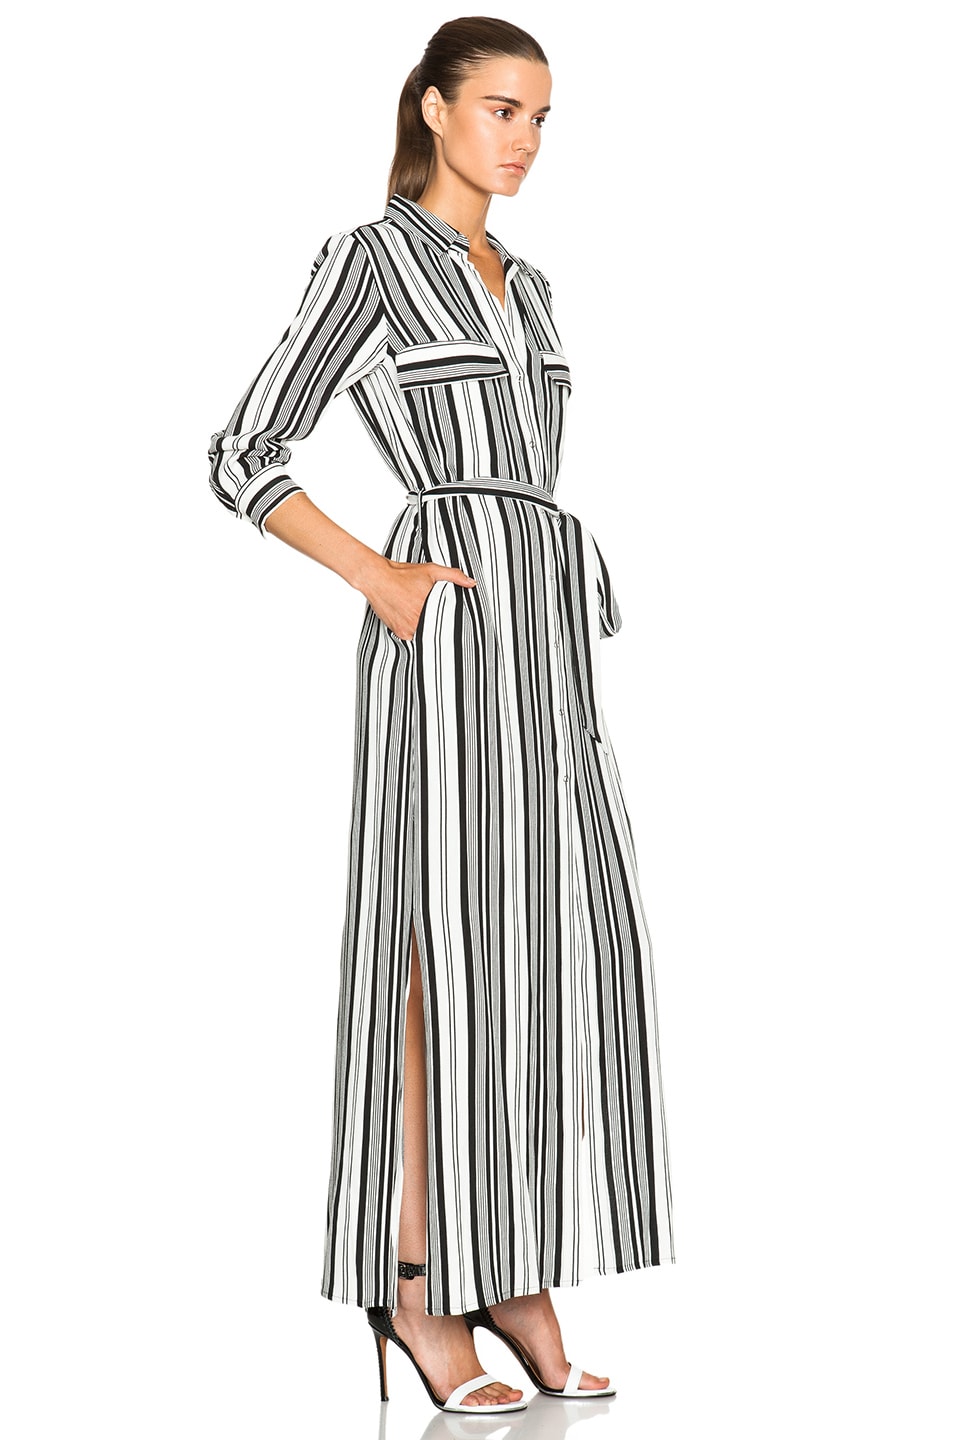 L'AGENCE Alani Dress in Antique White & Black Stripe | FWRD